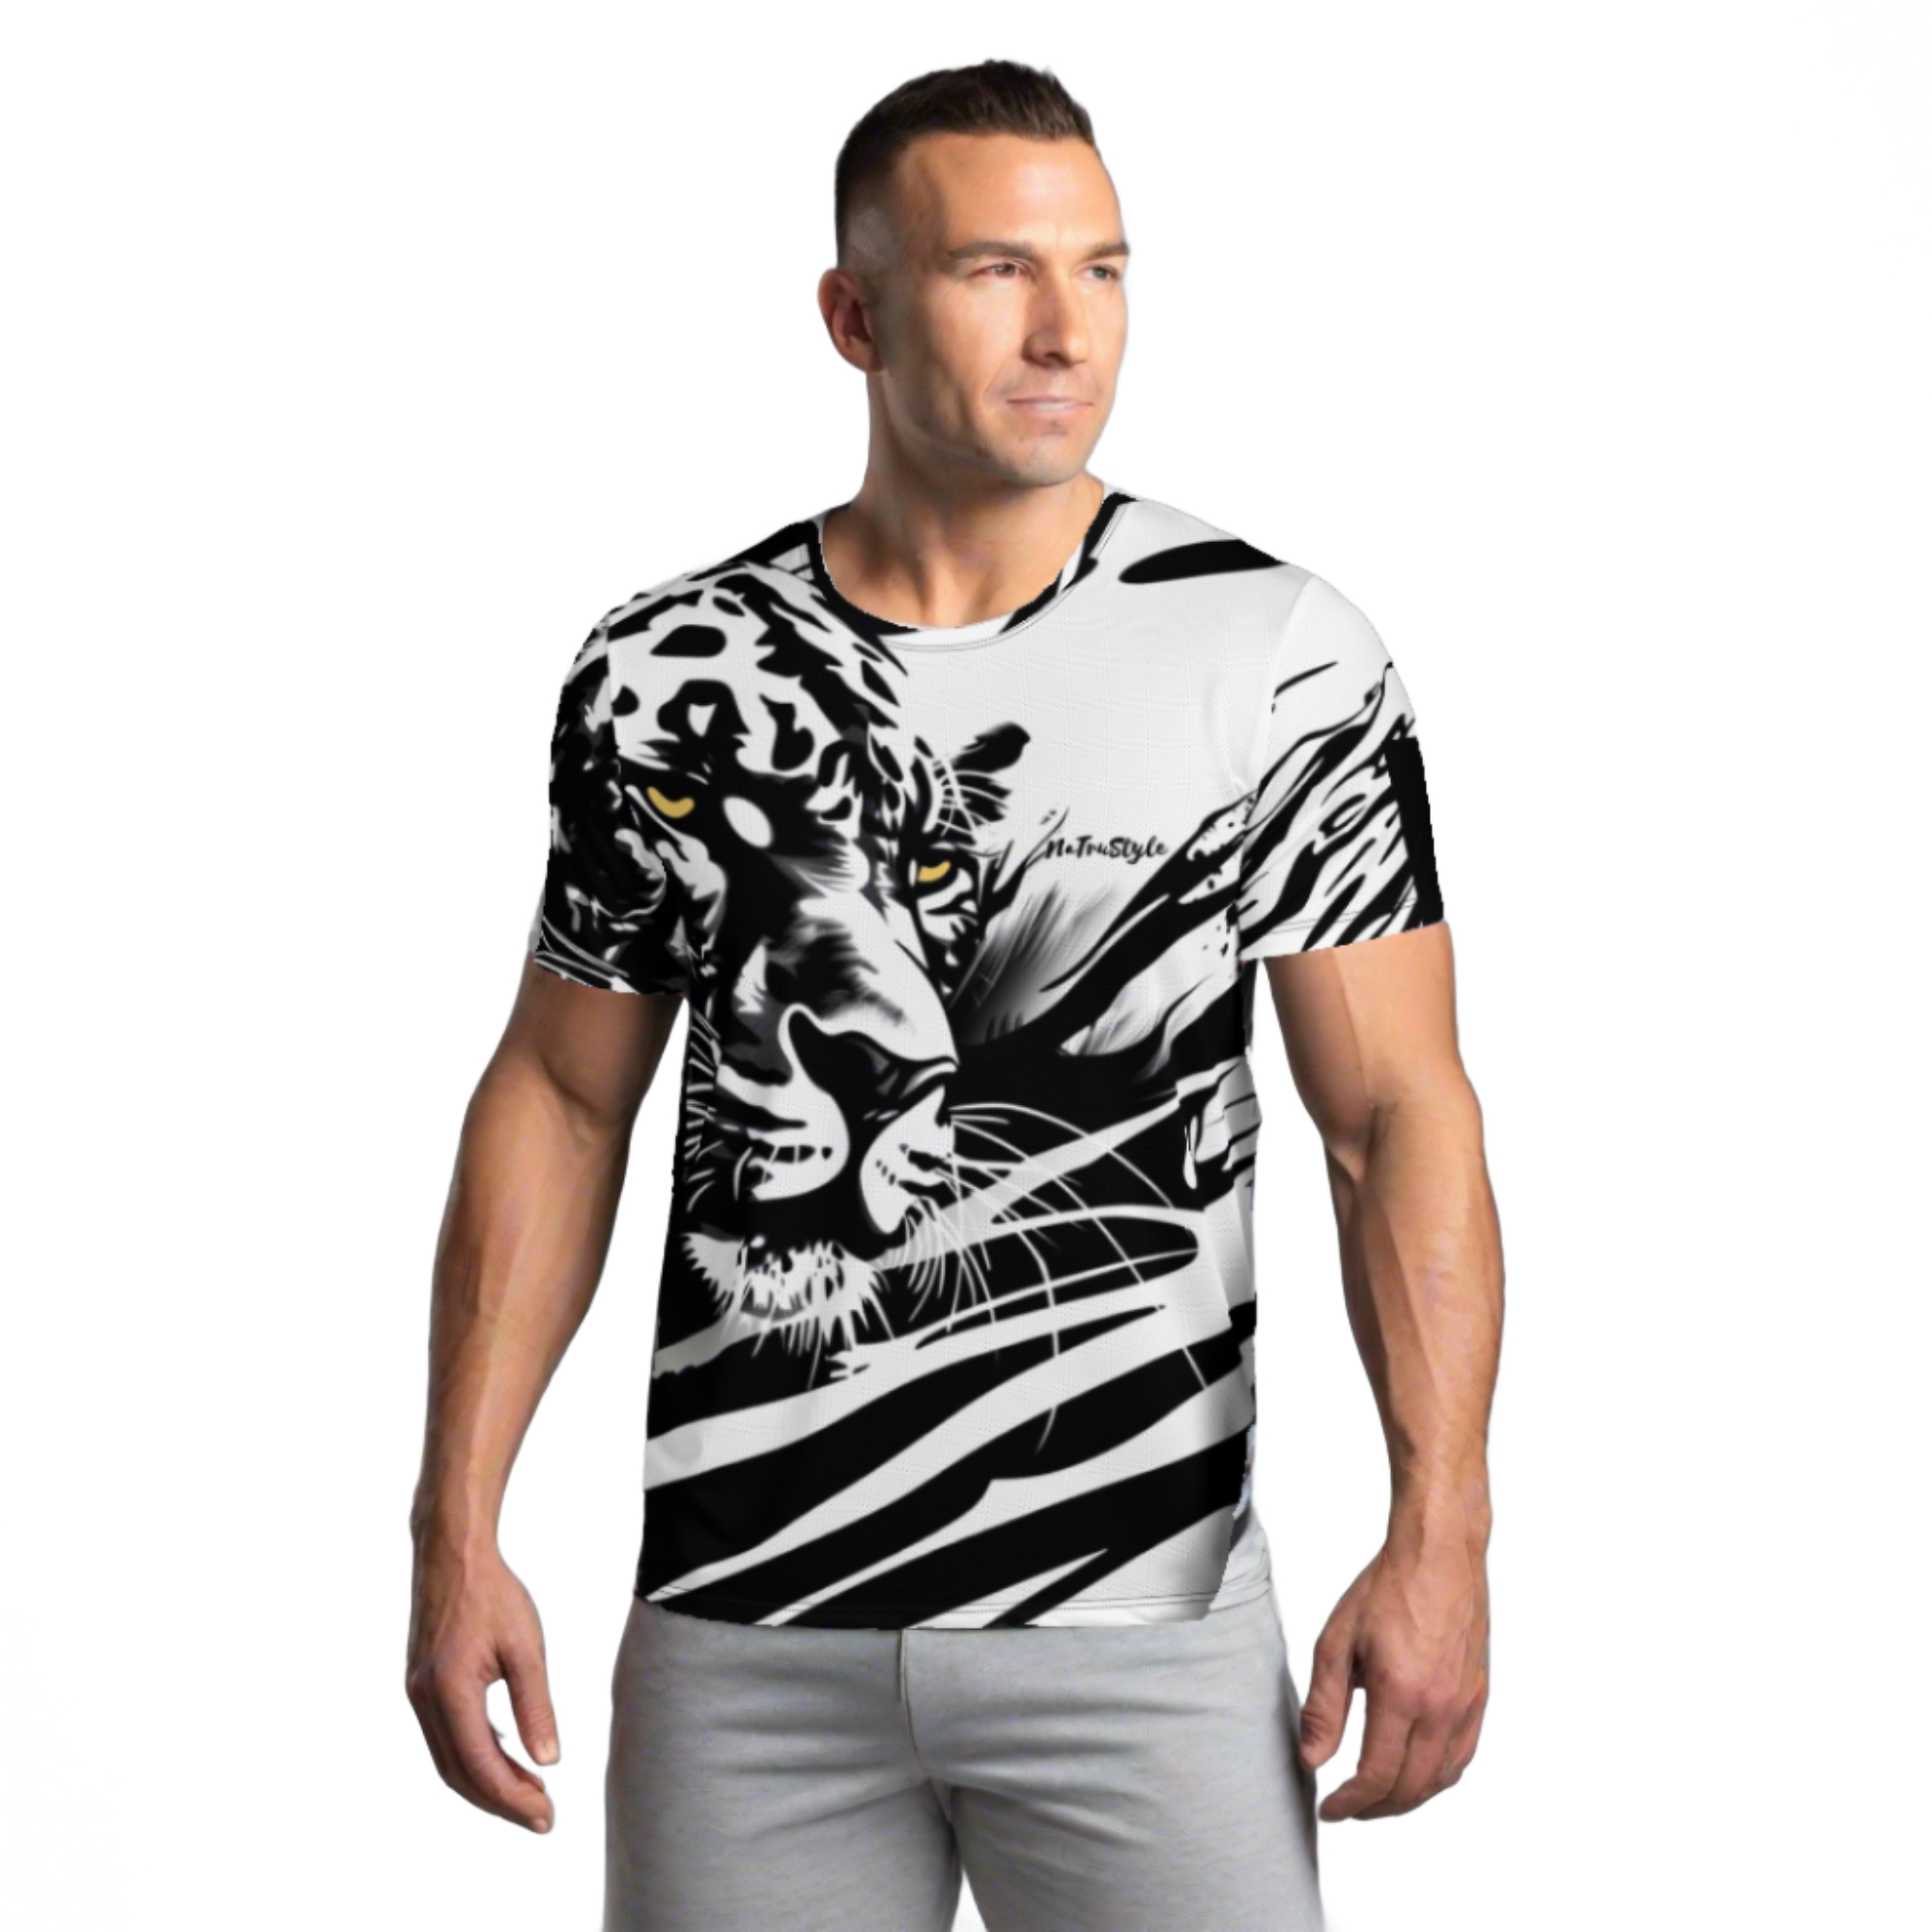 Leopard Print T-shirt